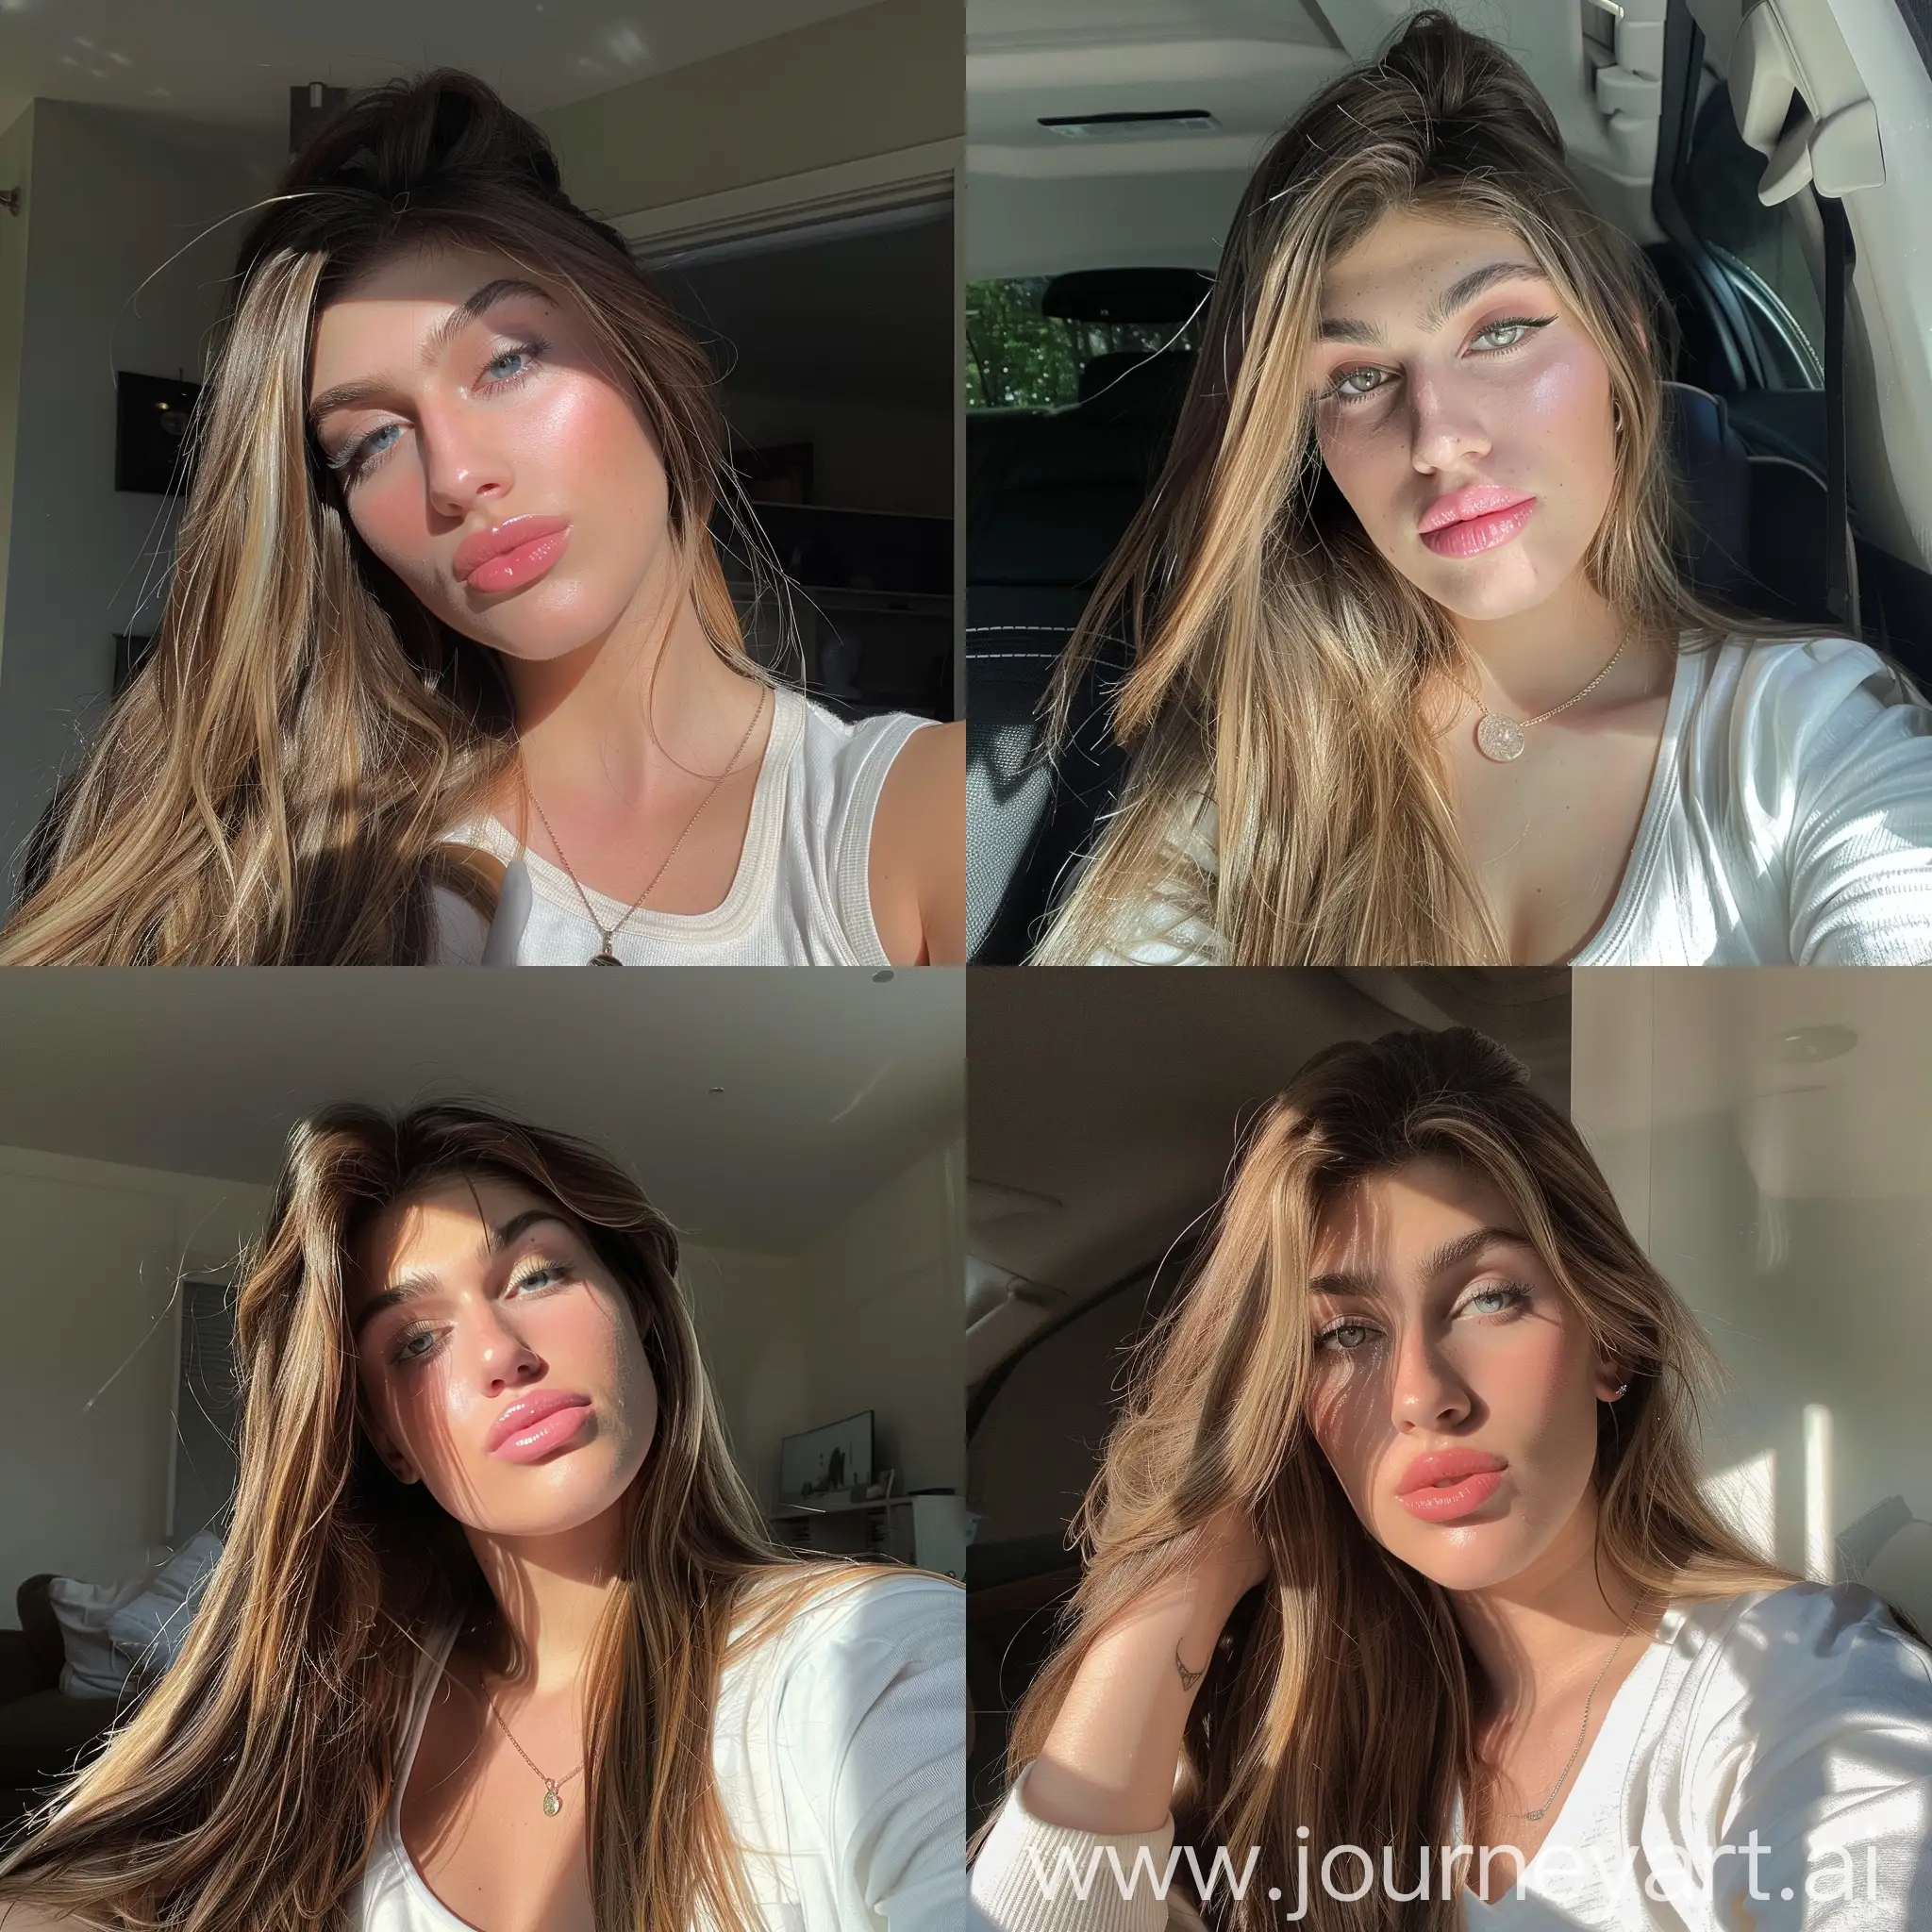 Aesthetic Instagram selfie of a girl 